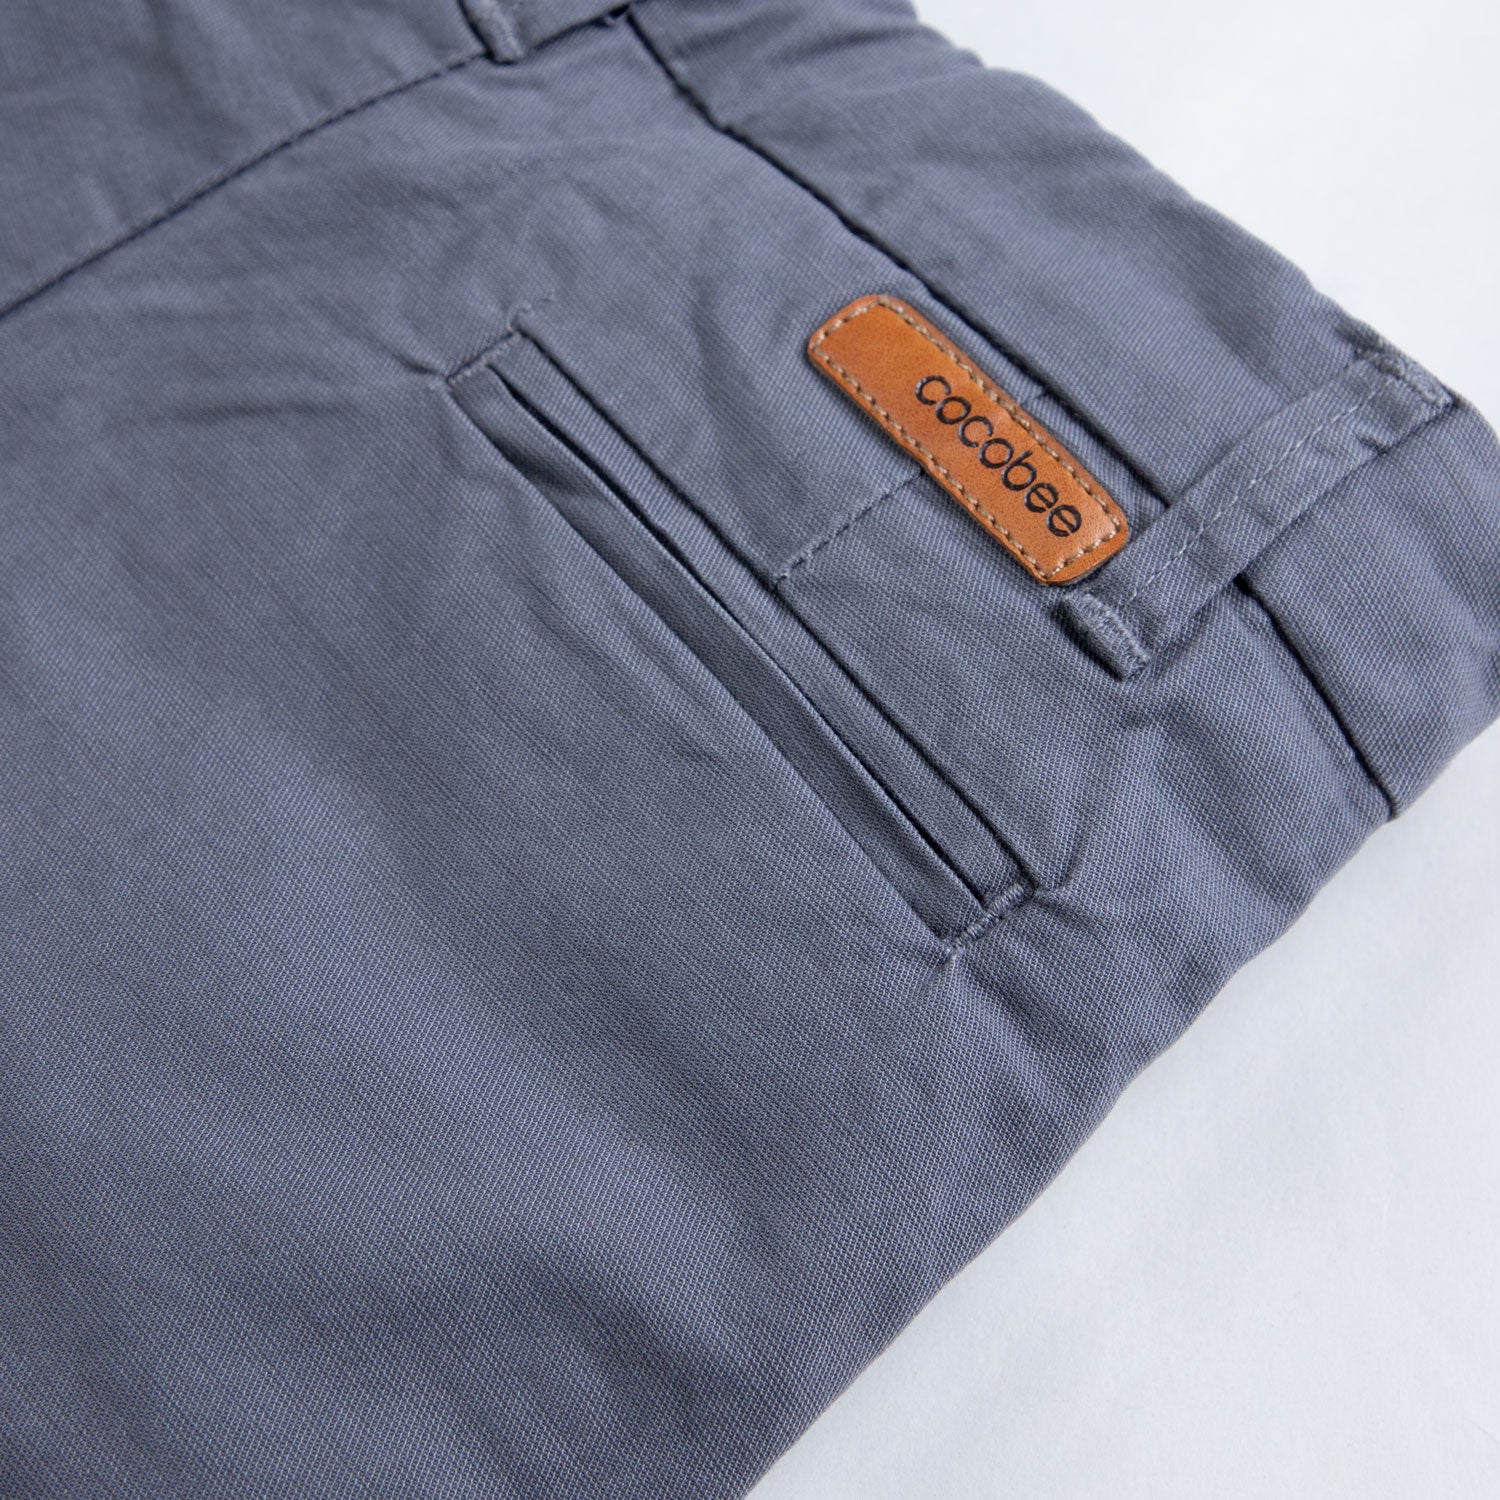 Grey cotton pant